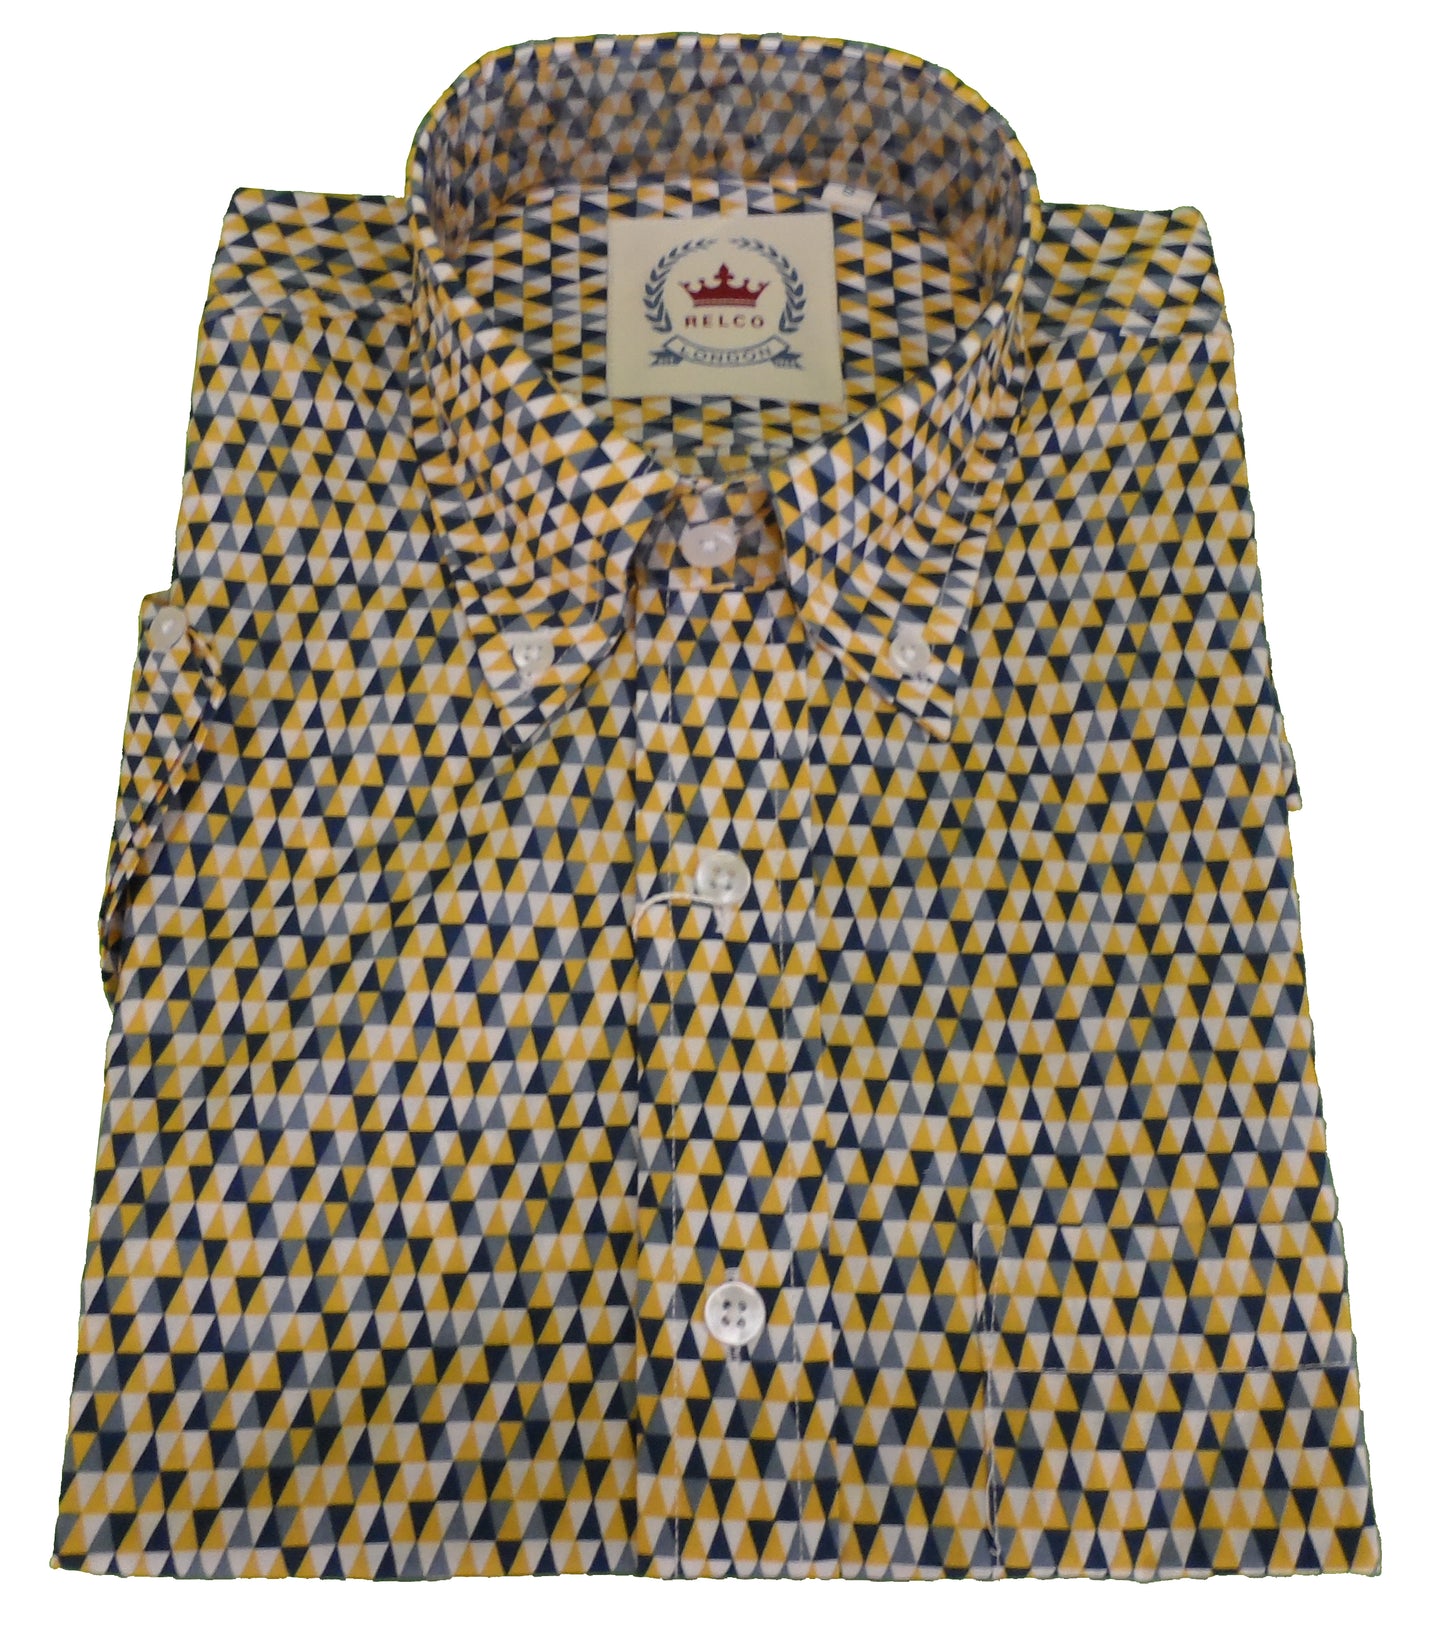 Relco Mens Yellow Retro Print Short Sleeved Mod Button Down Shirt